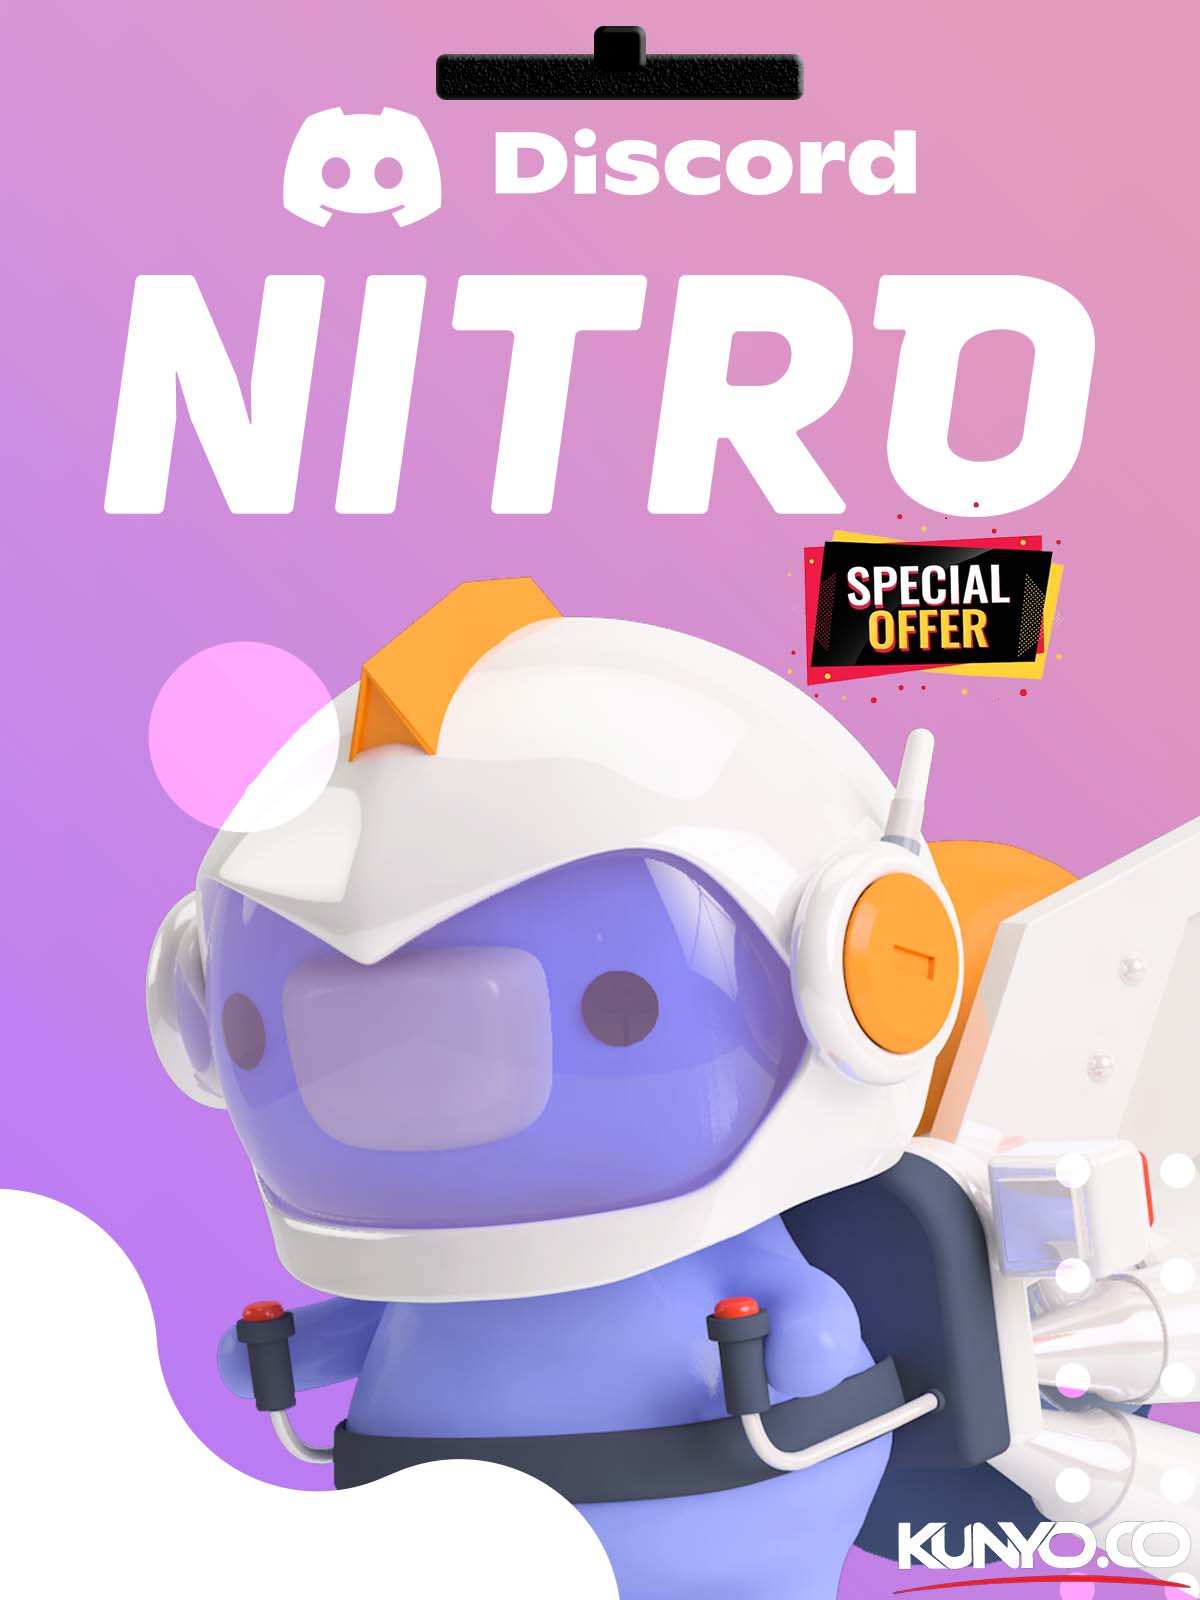 Discord Nitro Pack